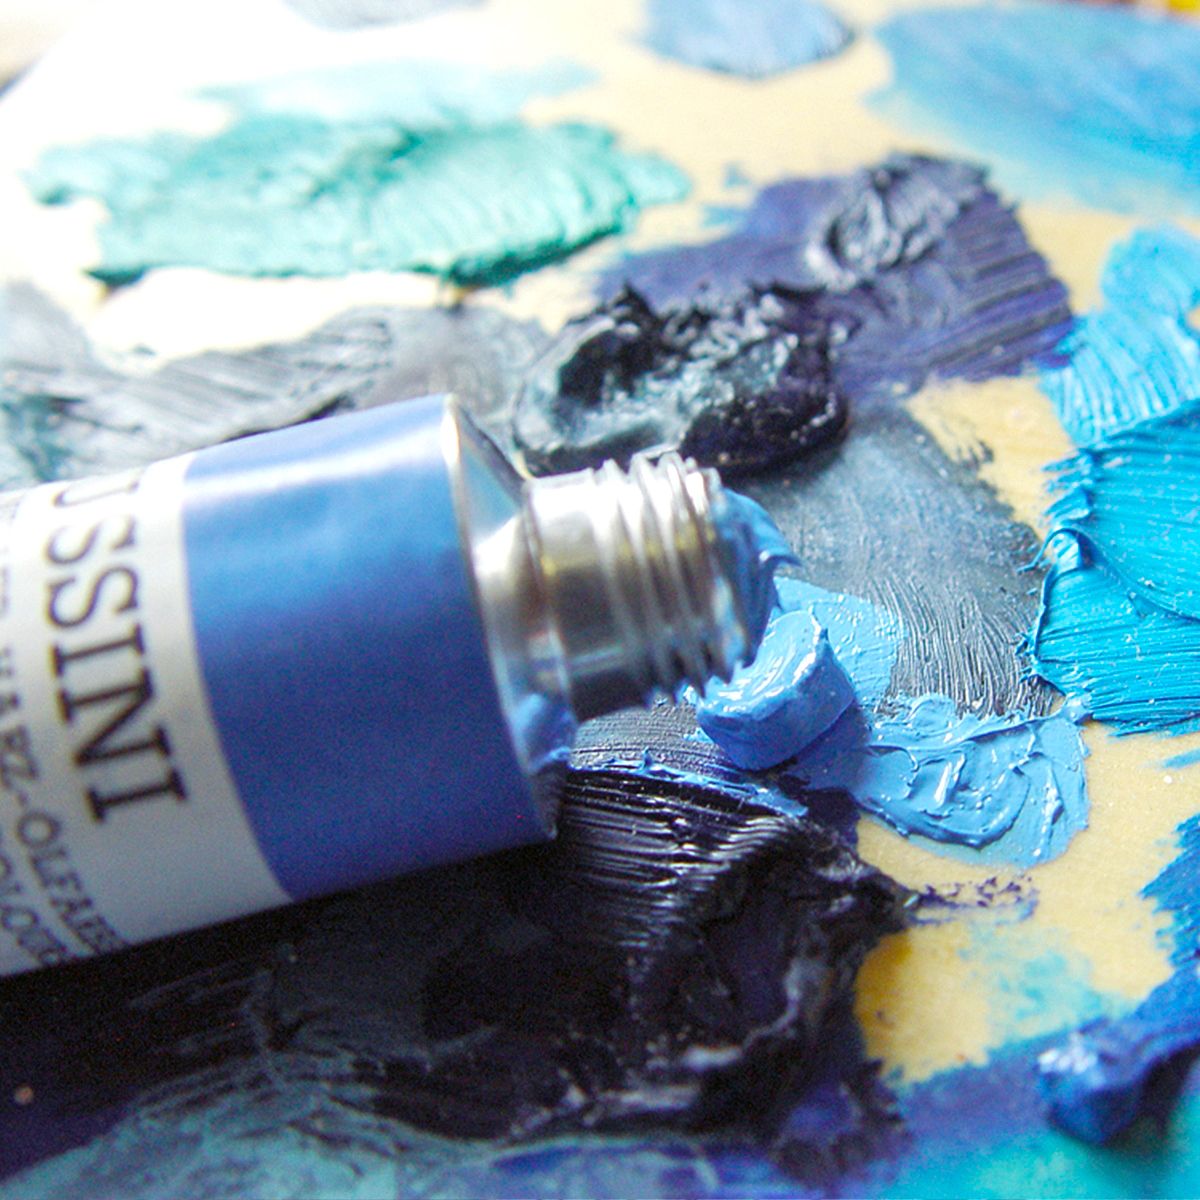 Professional Oil Painters, Pigment Aficionados